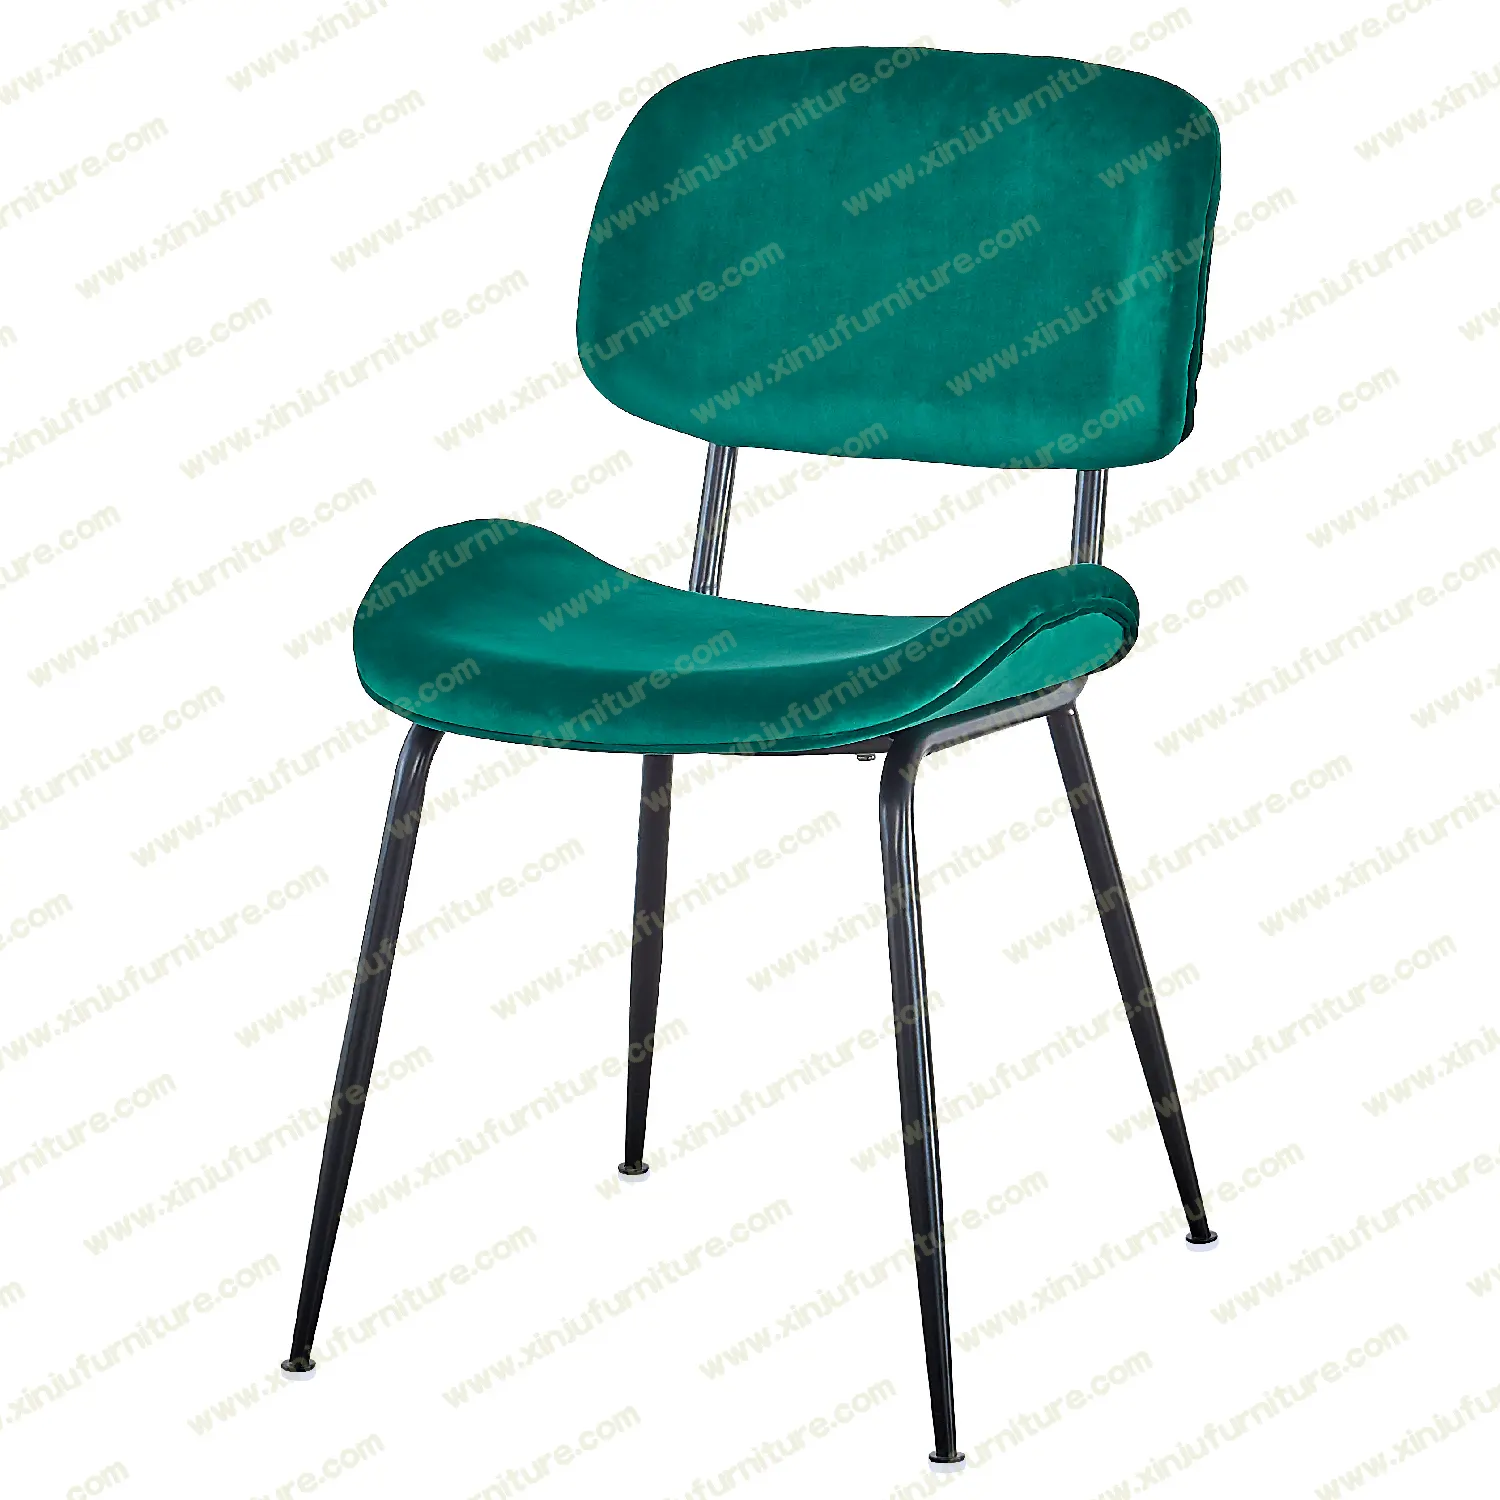 Simple armless dining chair grey